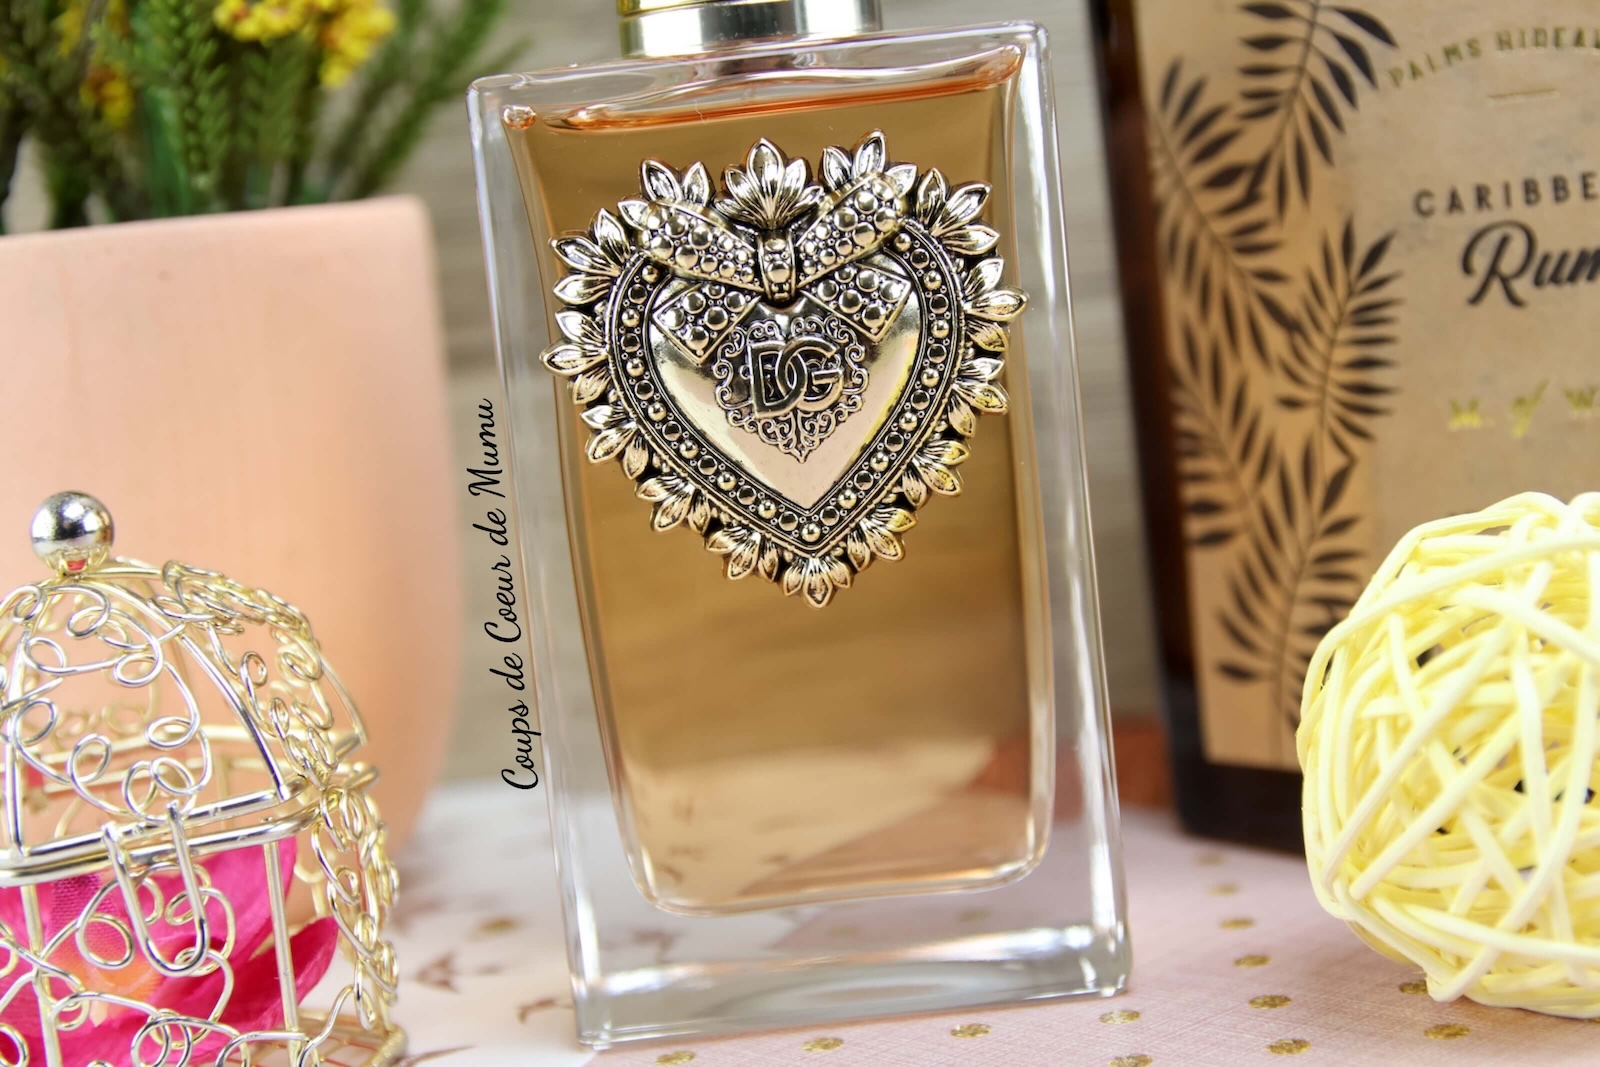 Meilleur parfum femme Devotion de Dolce & Gabbana